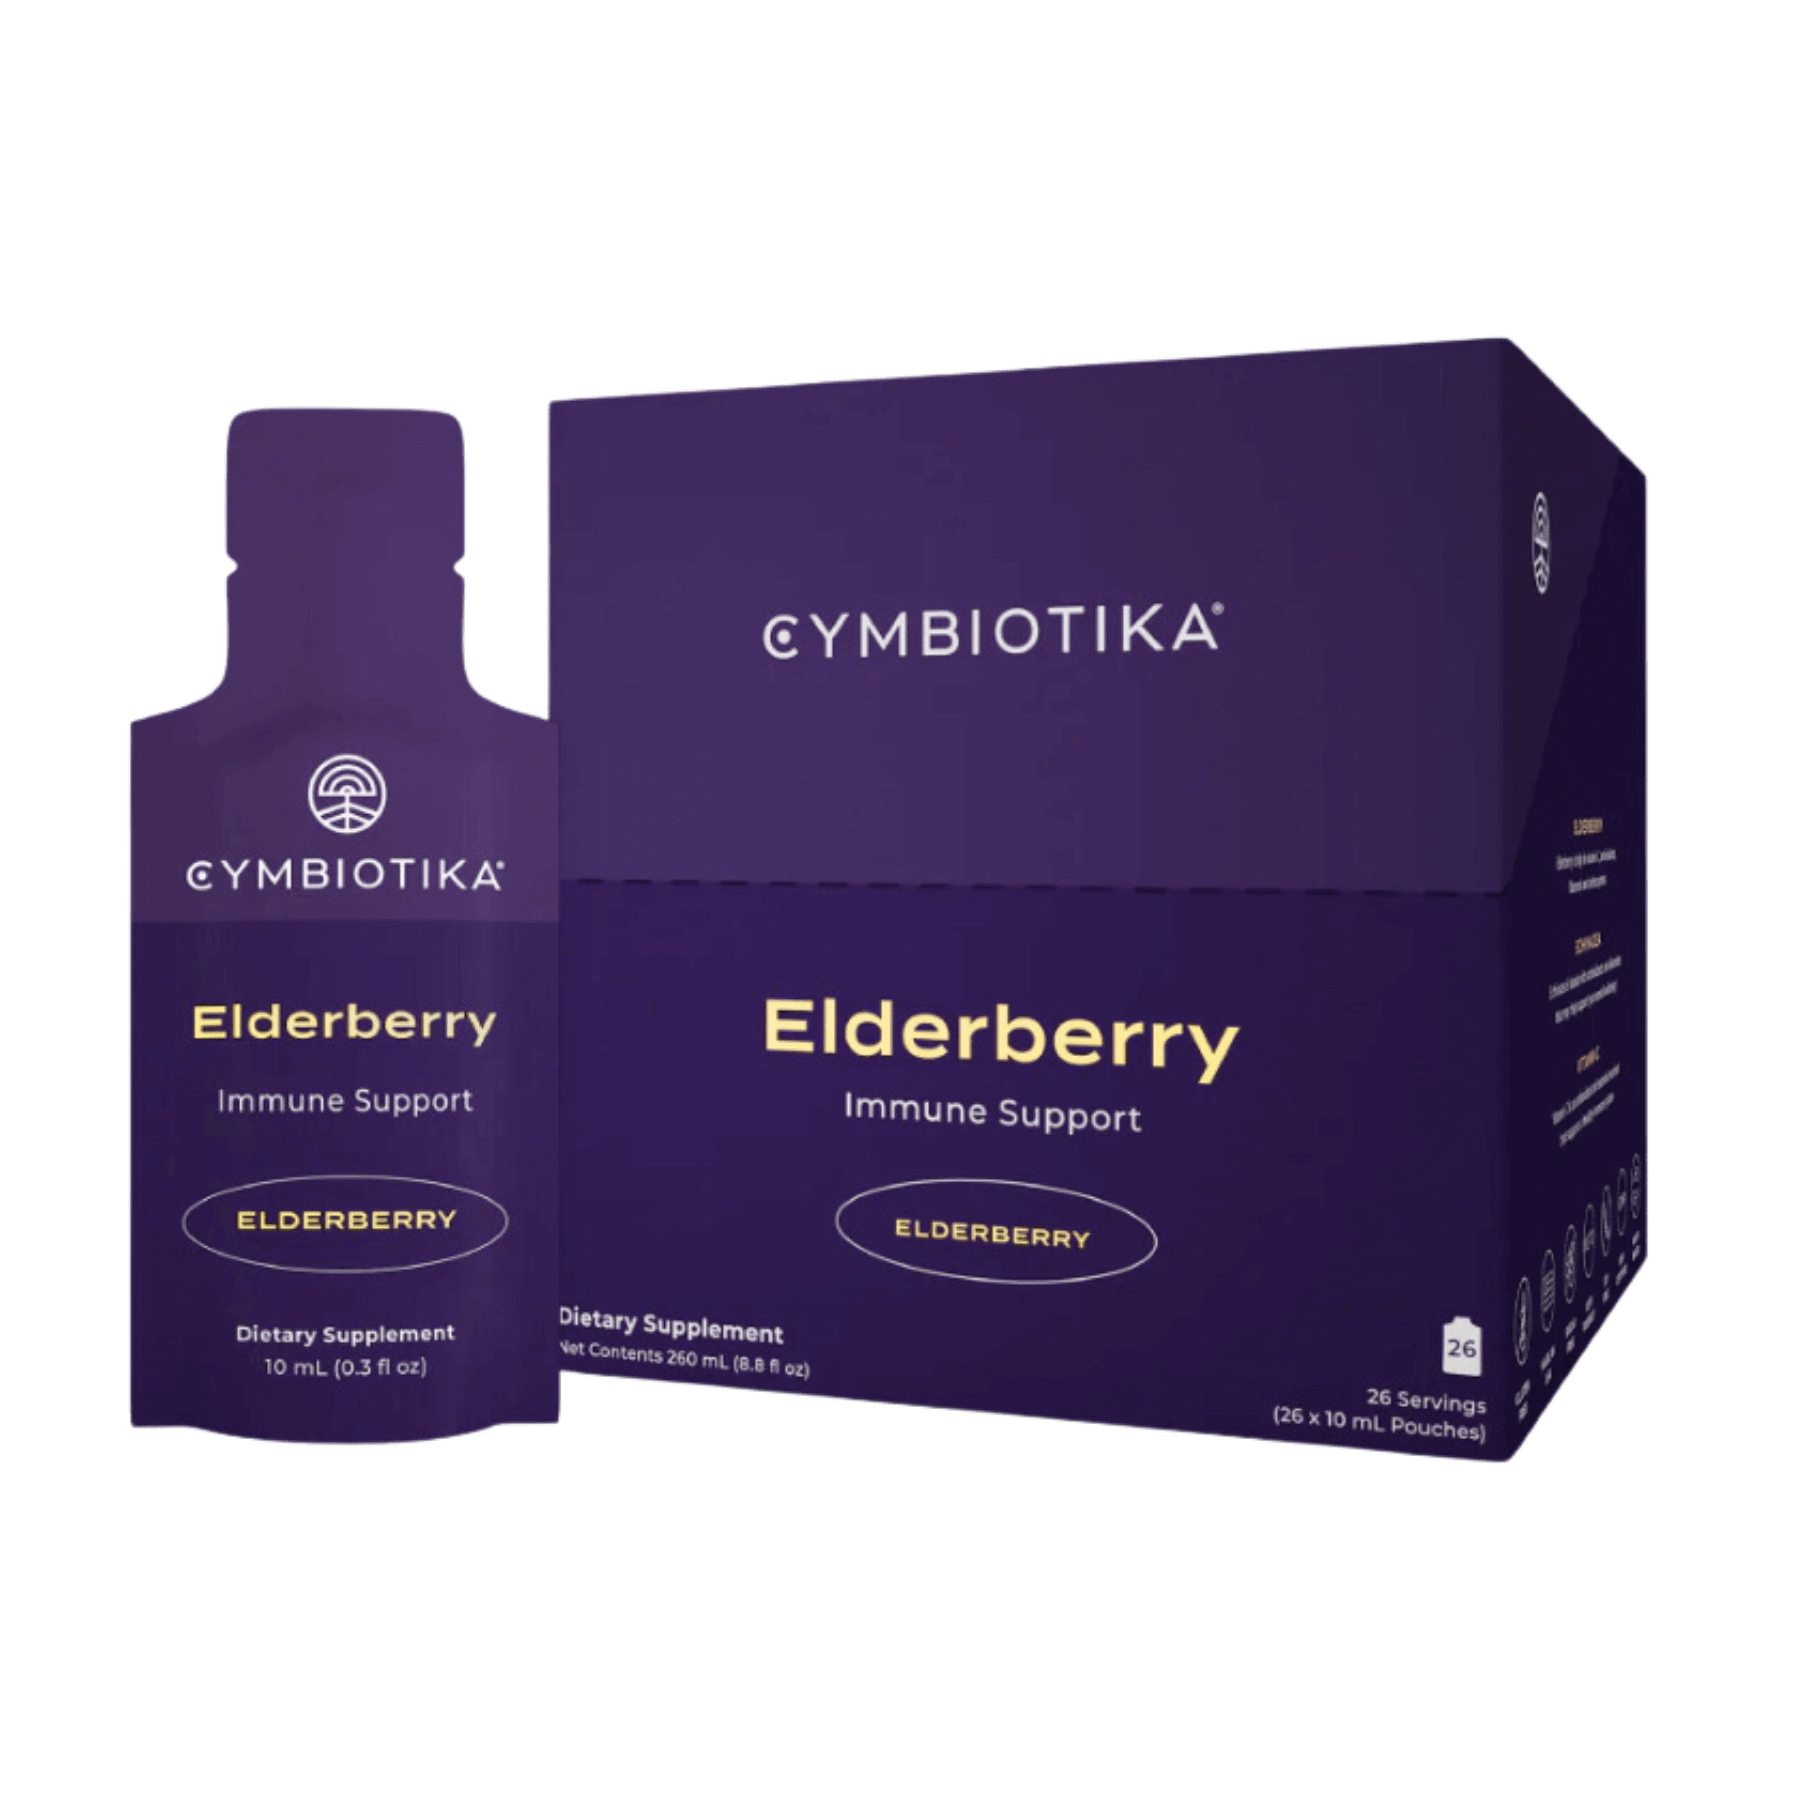 Image of Cymbiotika Elderberry Packets